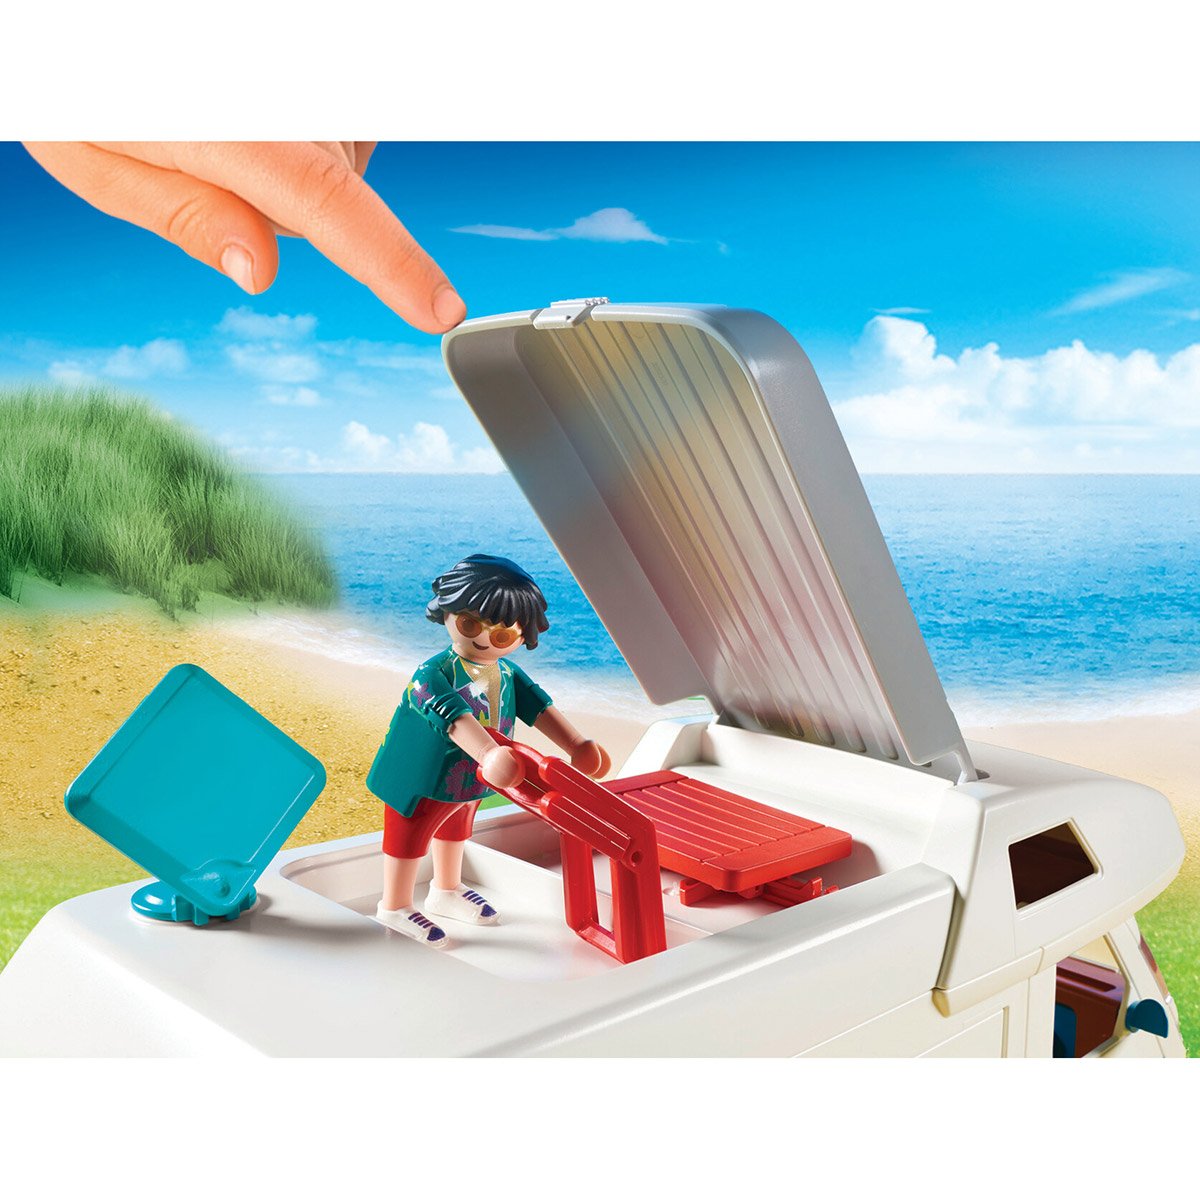 Playmobil 70088 Famille et Camping-Car - Family Fun - Tout équipé